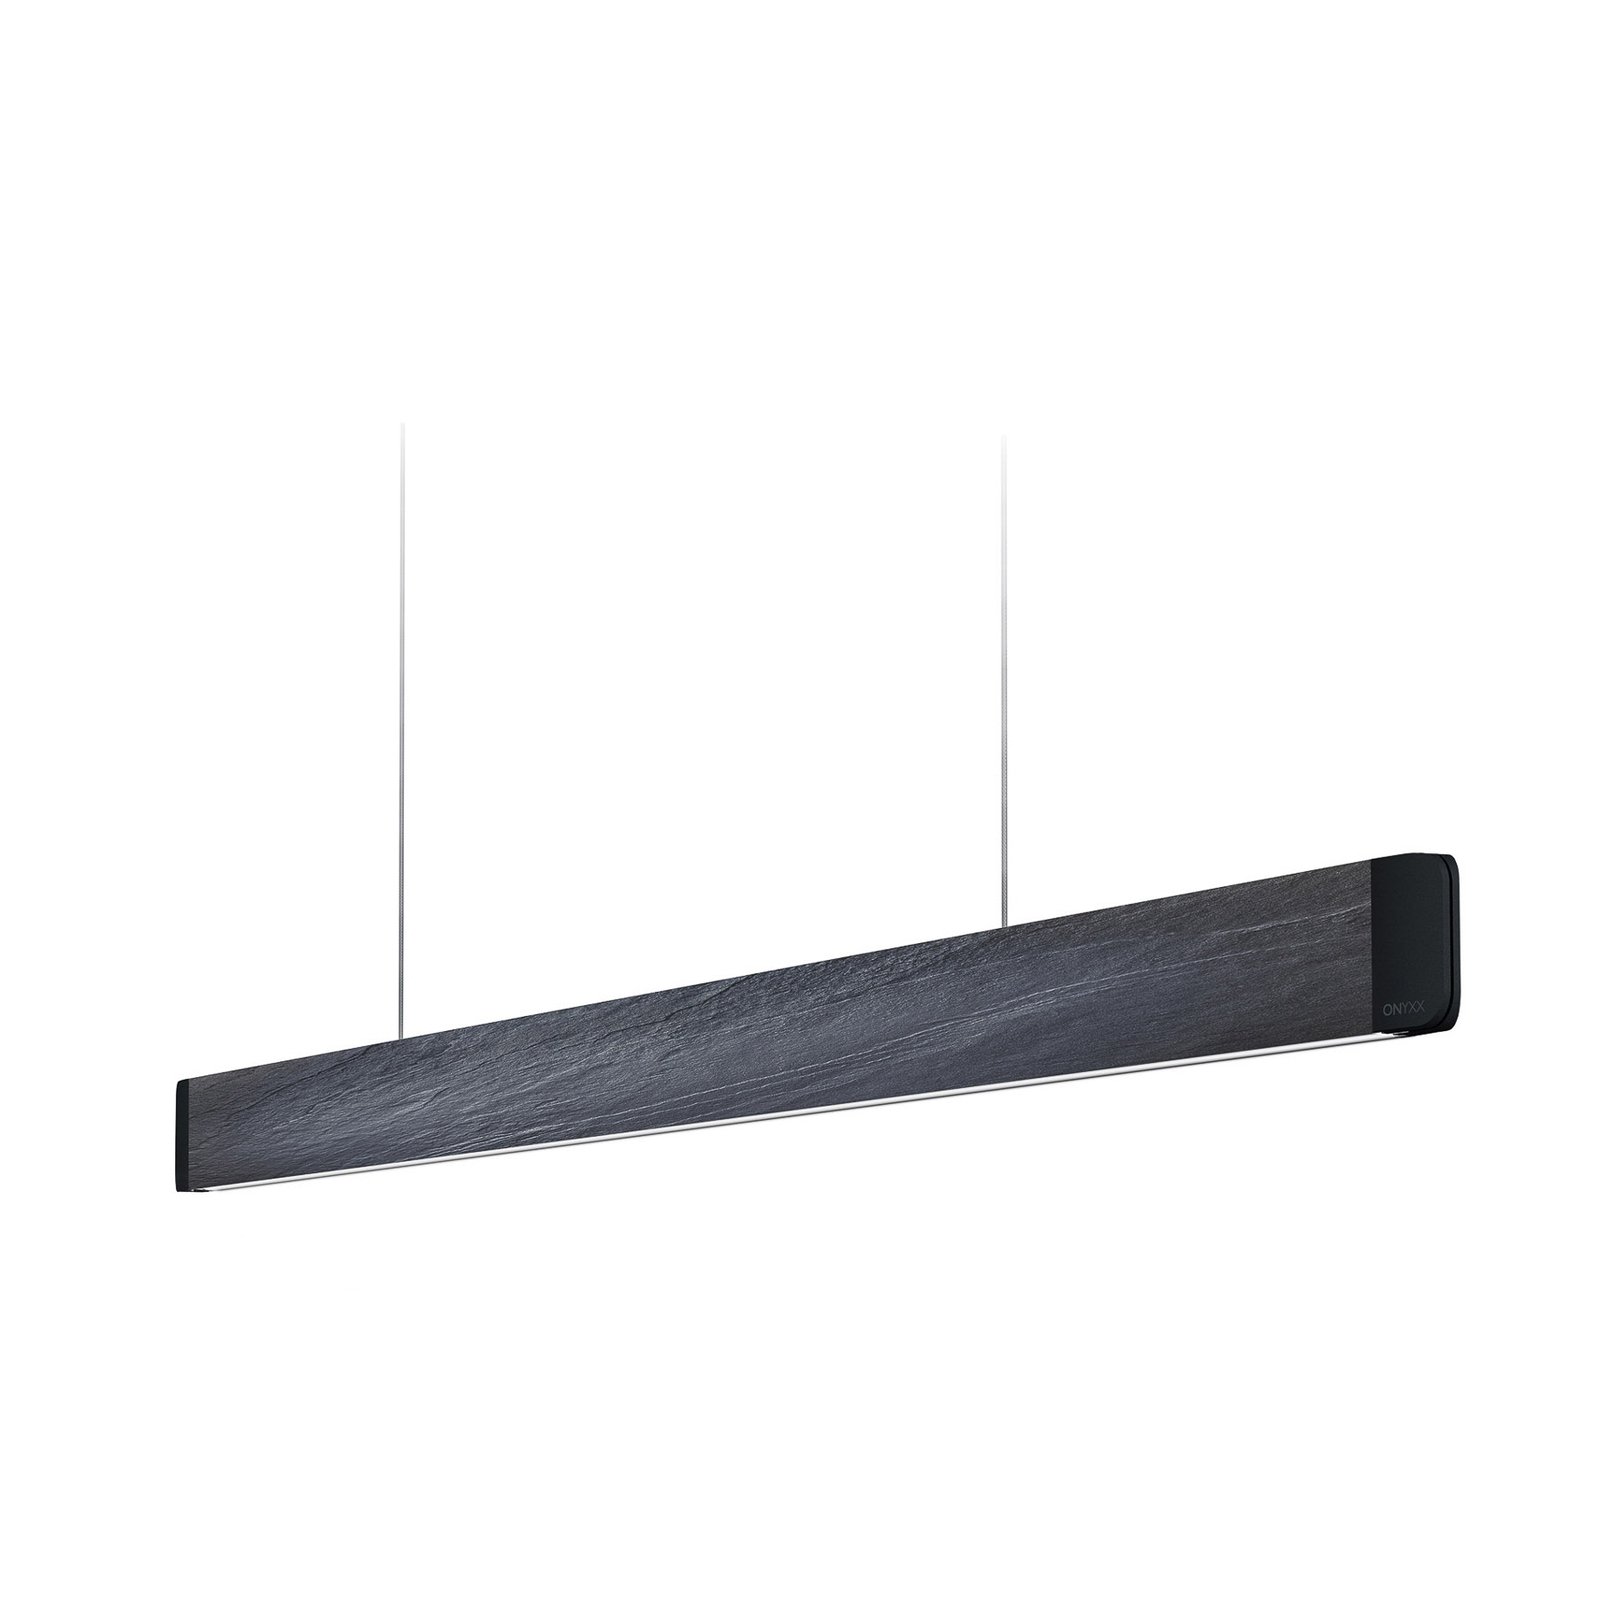 GRIMMEISEN Onyxx Linea Pro hanglamp leisteen/zwart